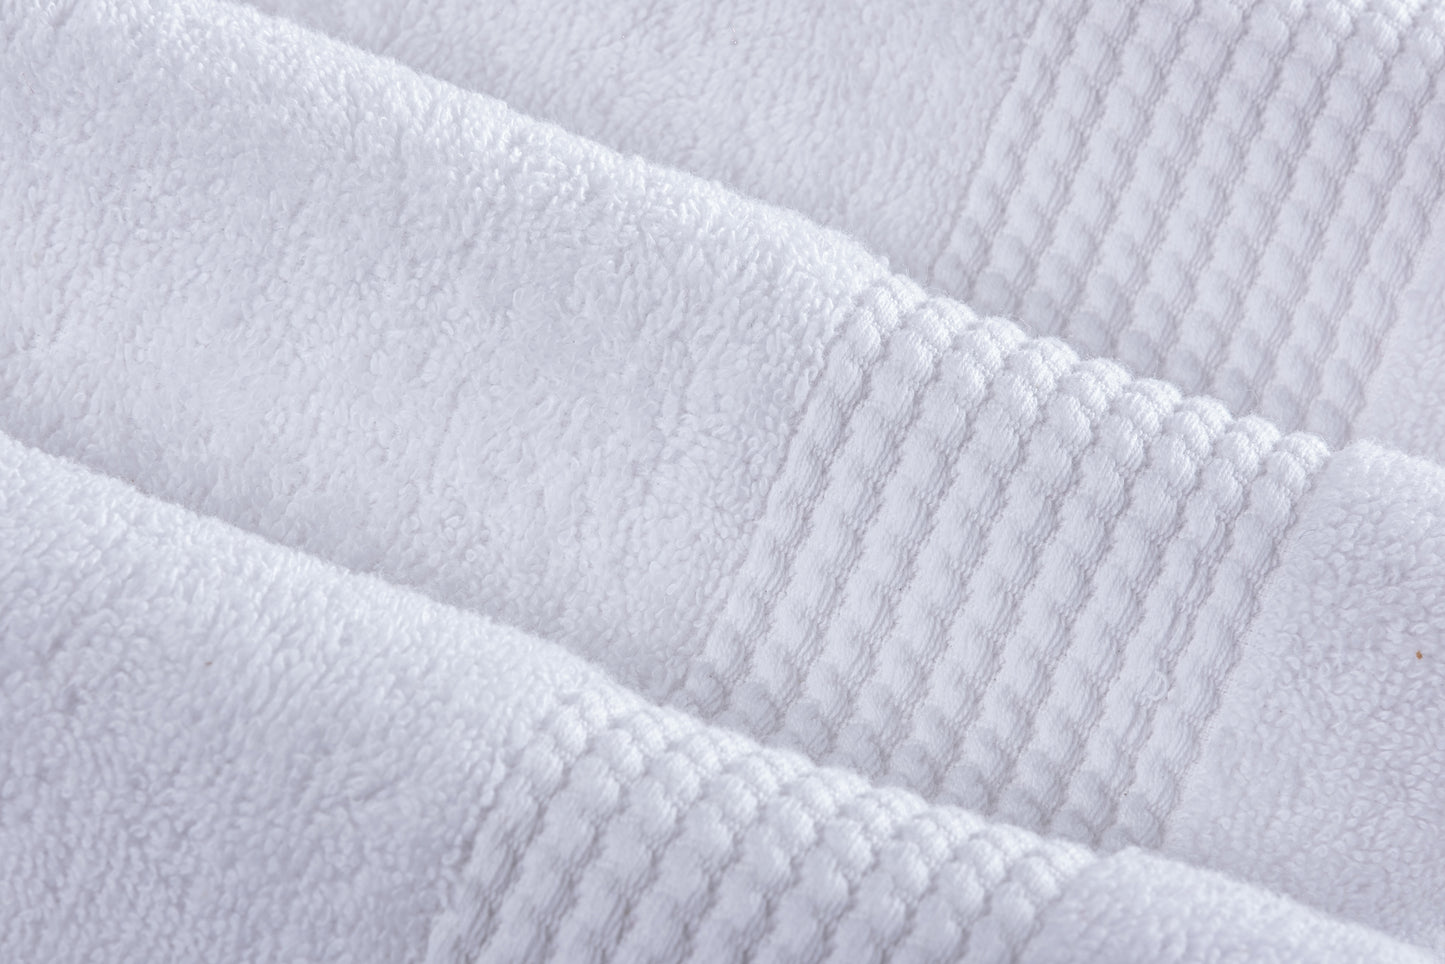 Buy Avi Living White Cotton 500 GSM Bath Towel - Set of 4 at Best